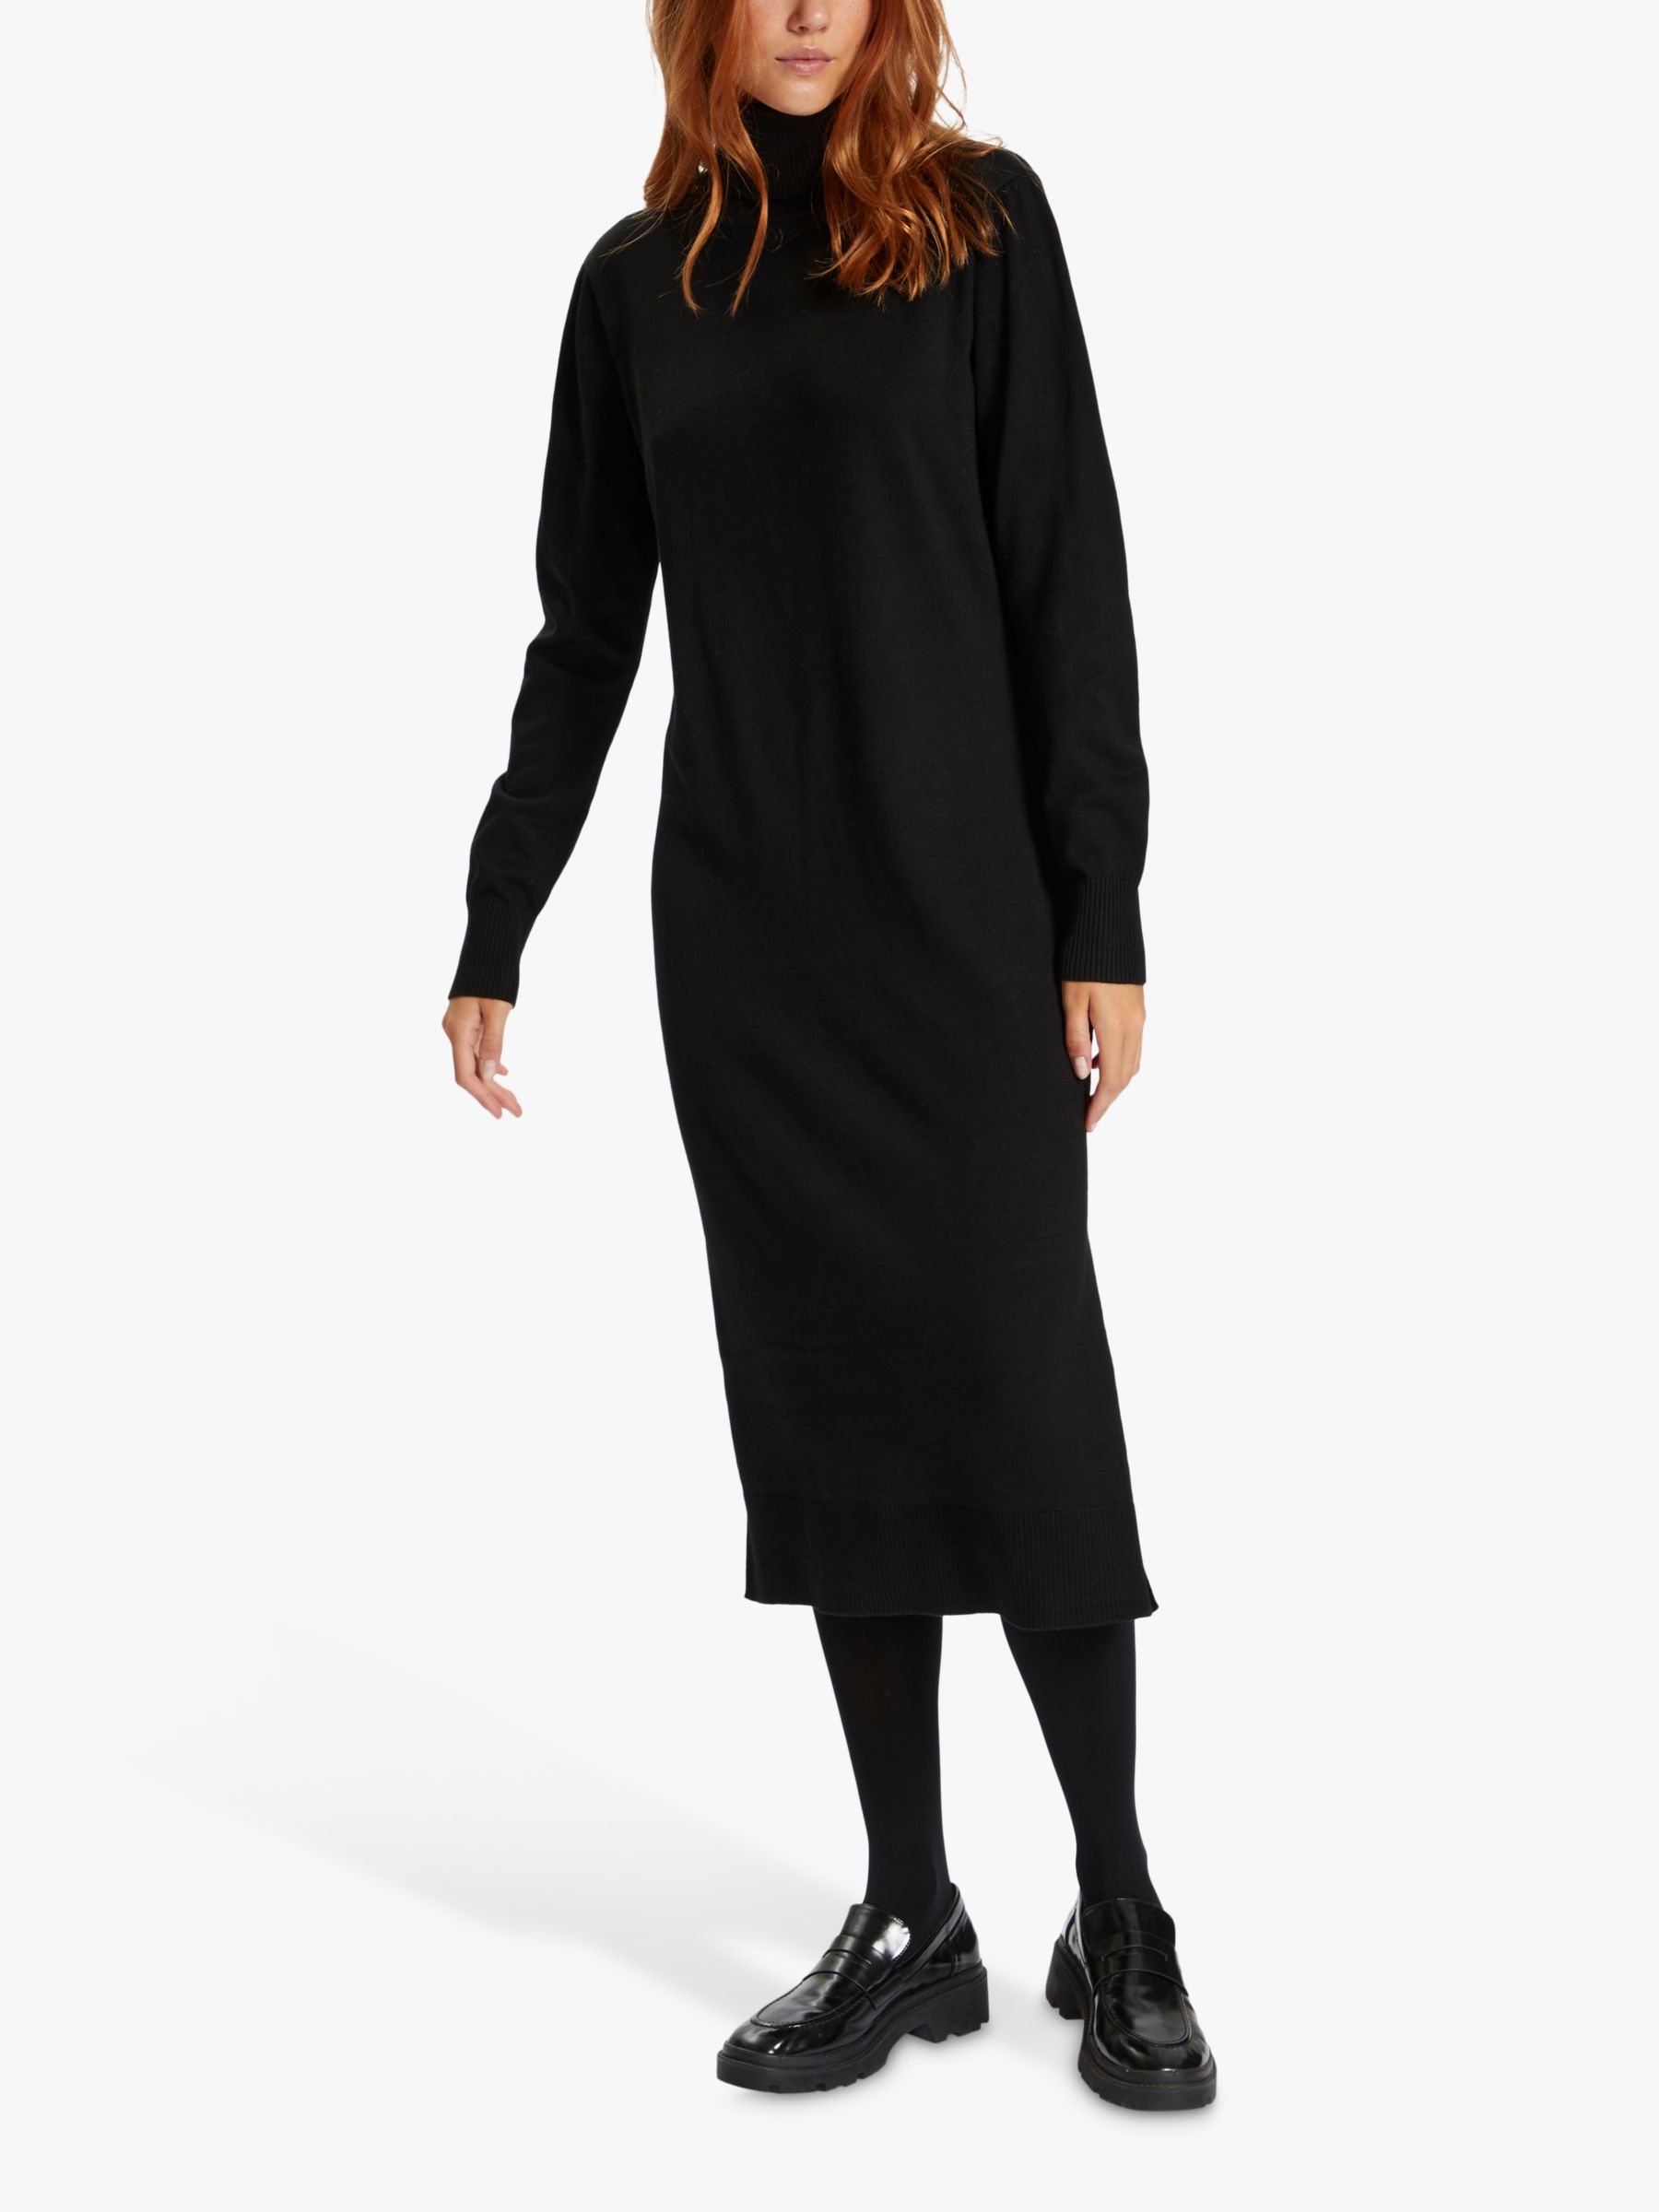 Saint Tropez Mila Rollneck Midi Dress, Black at John Lewis & Partners